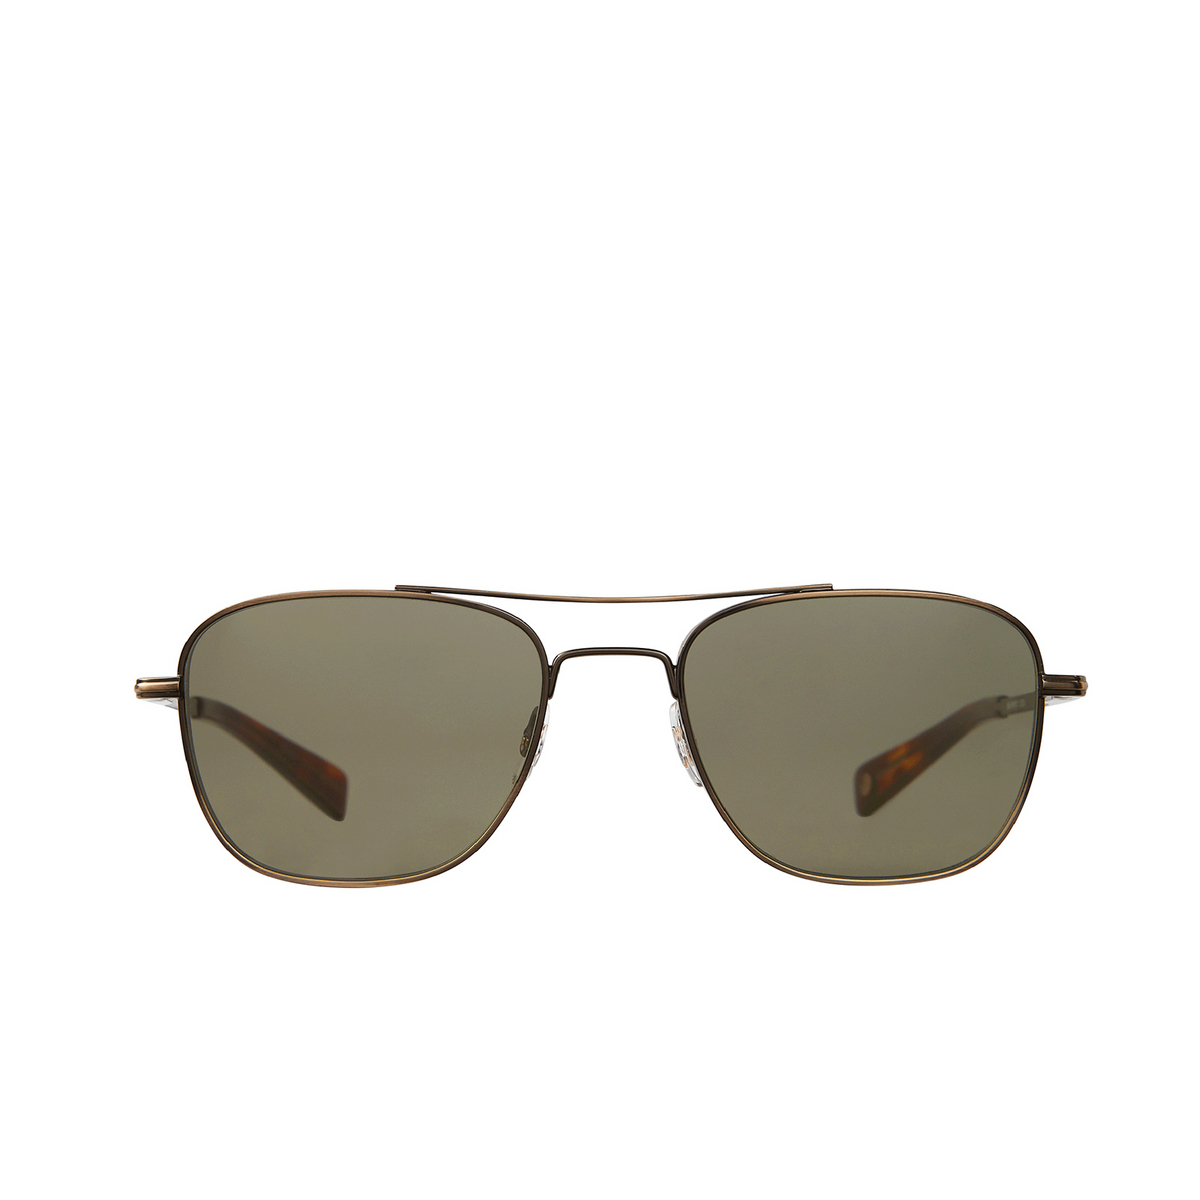 Garrett Leight® Aviator Sunglasses: Harbor Sun color BG-1965TO/G15SUV Brushed Gold-1965 Tortoise/g15 Suv - front view